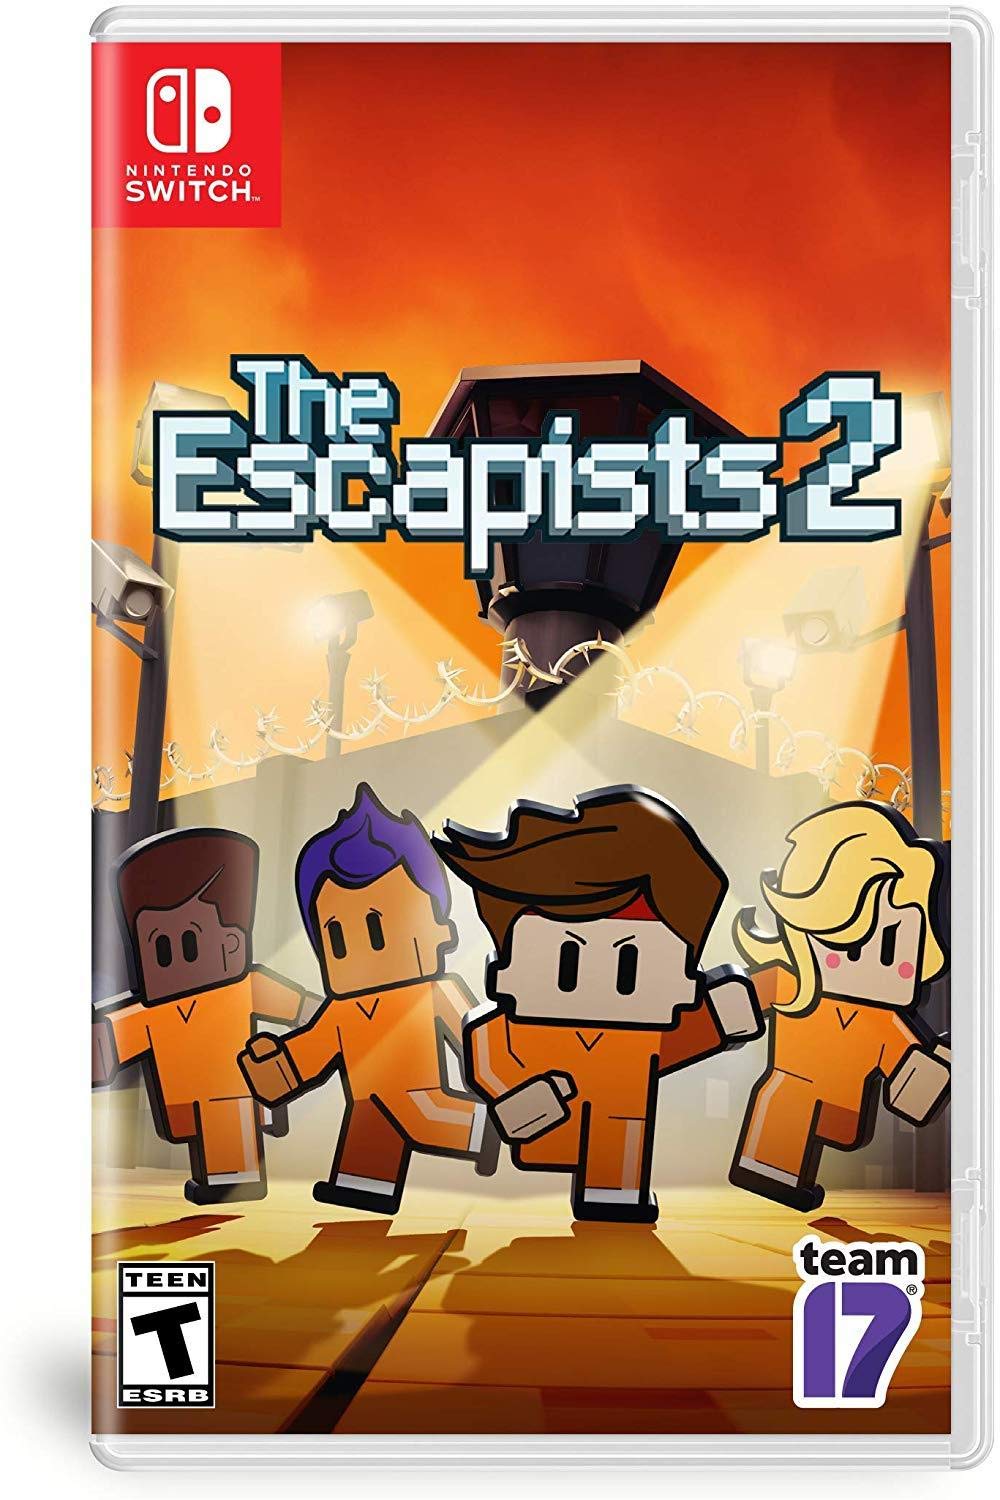 Escapists 2, The